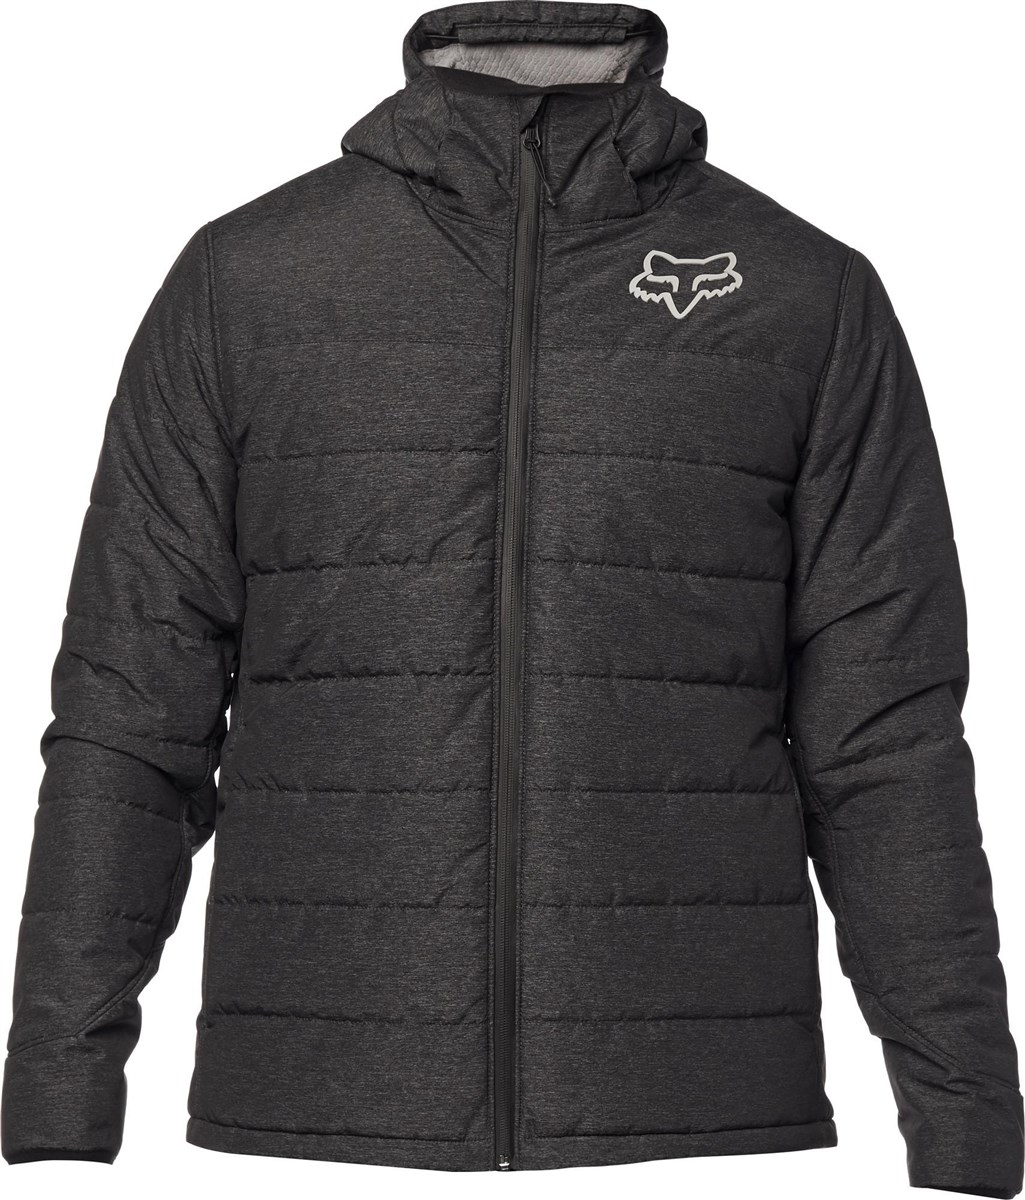 Fox Clothing Bishop Jacket product image